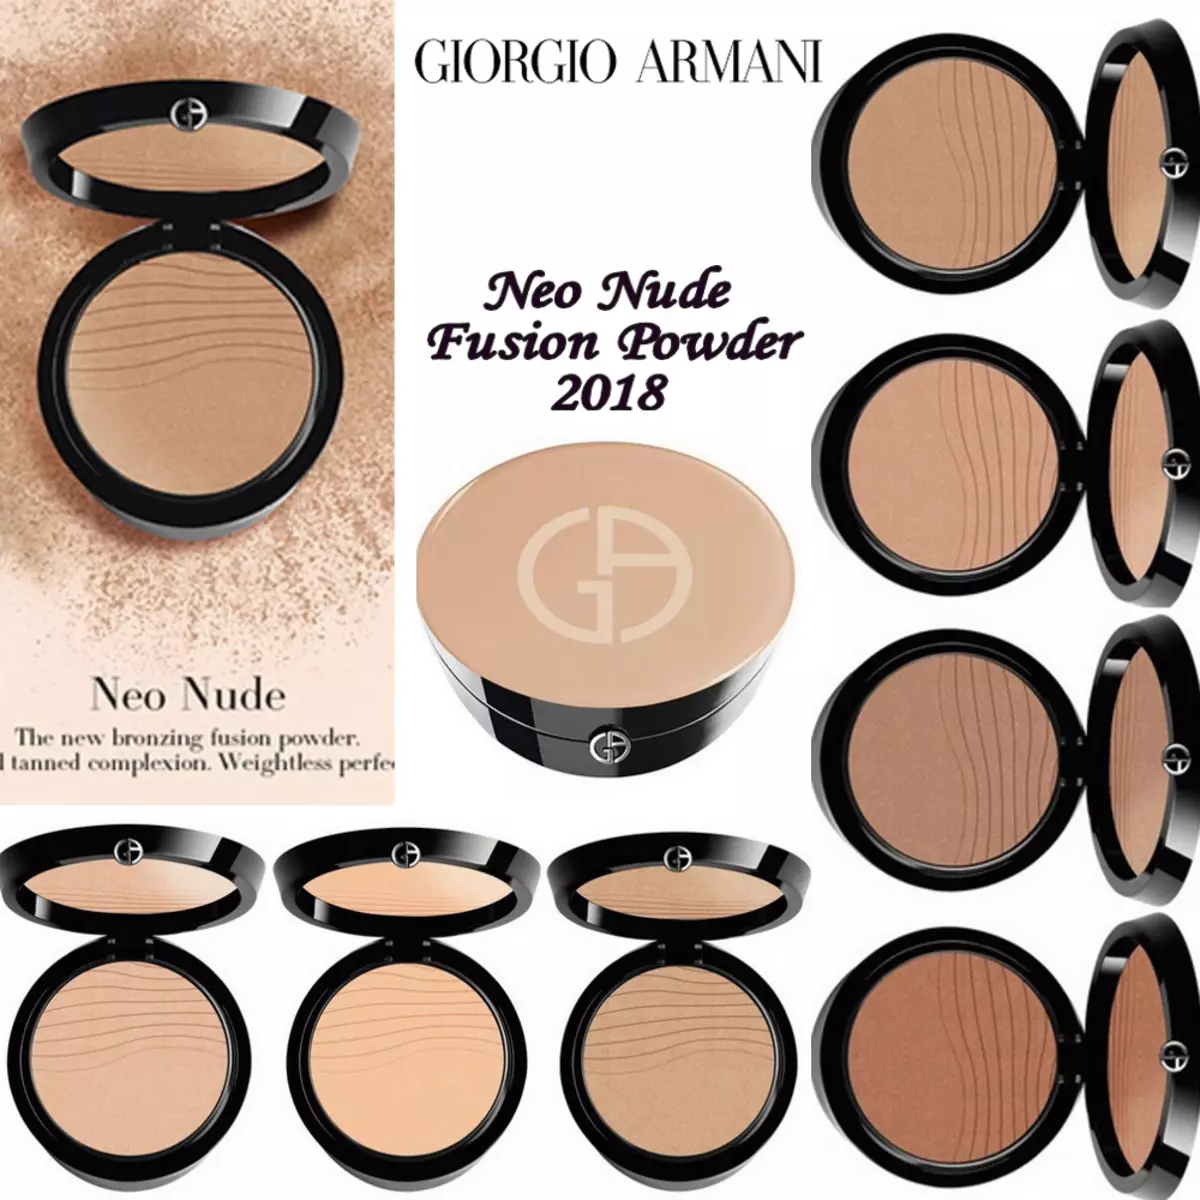 Kozmetîk Giorgio Armani: Review of Kosmetics Decorative, Pro û Cons, bijarte 4906_11